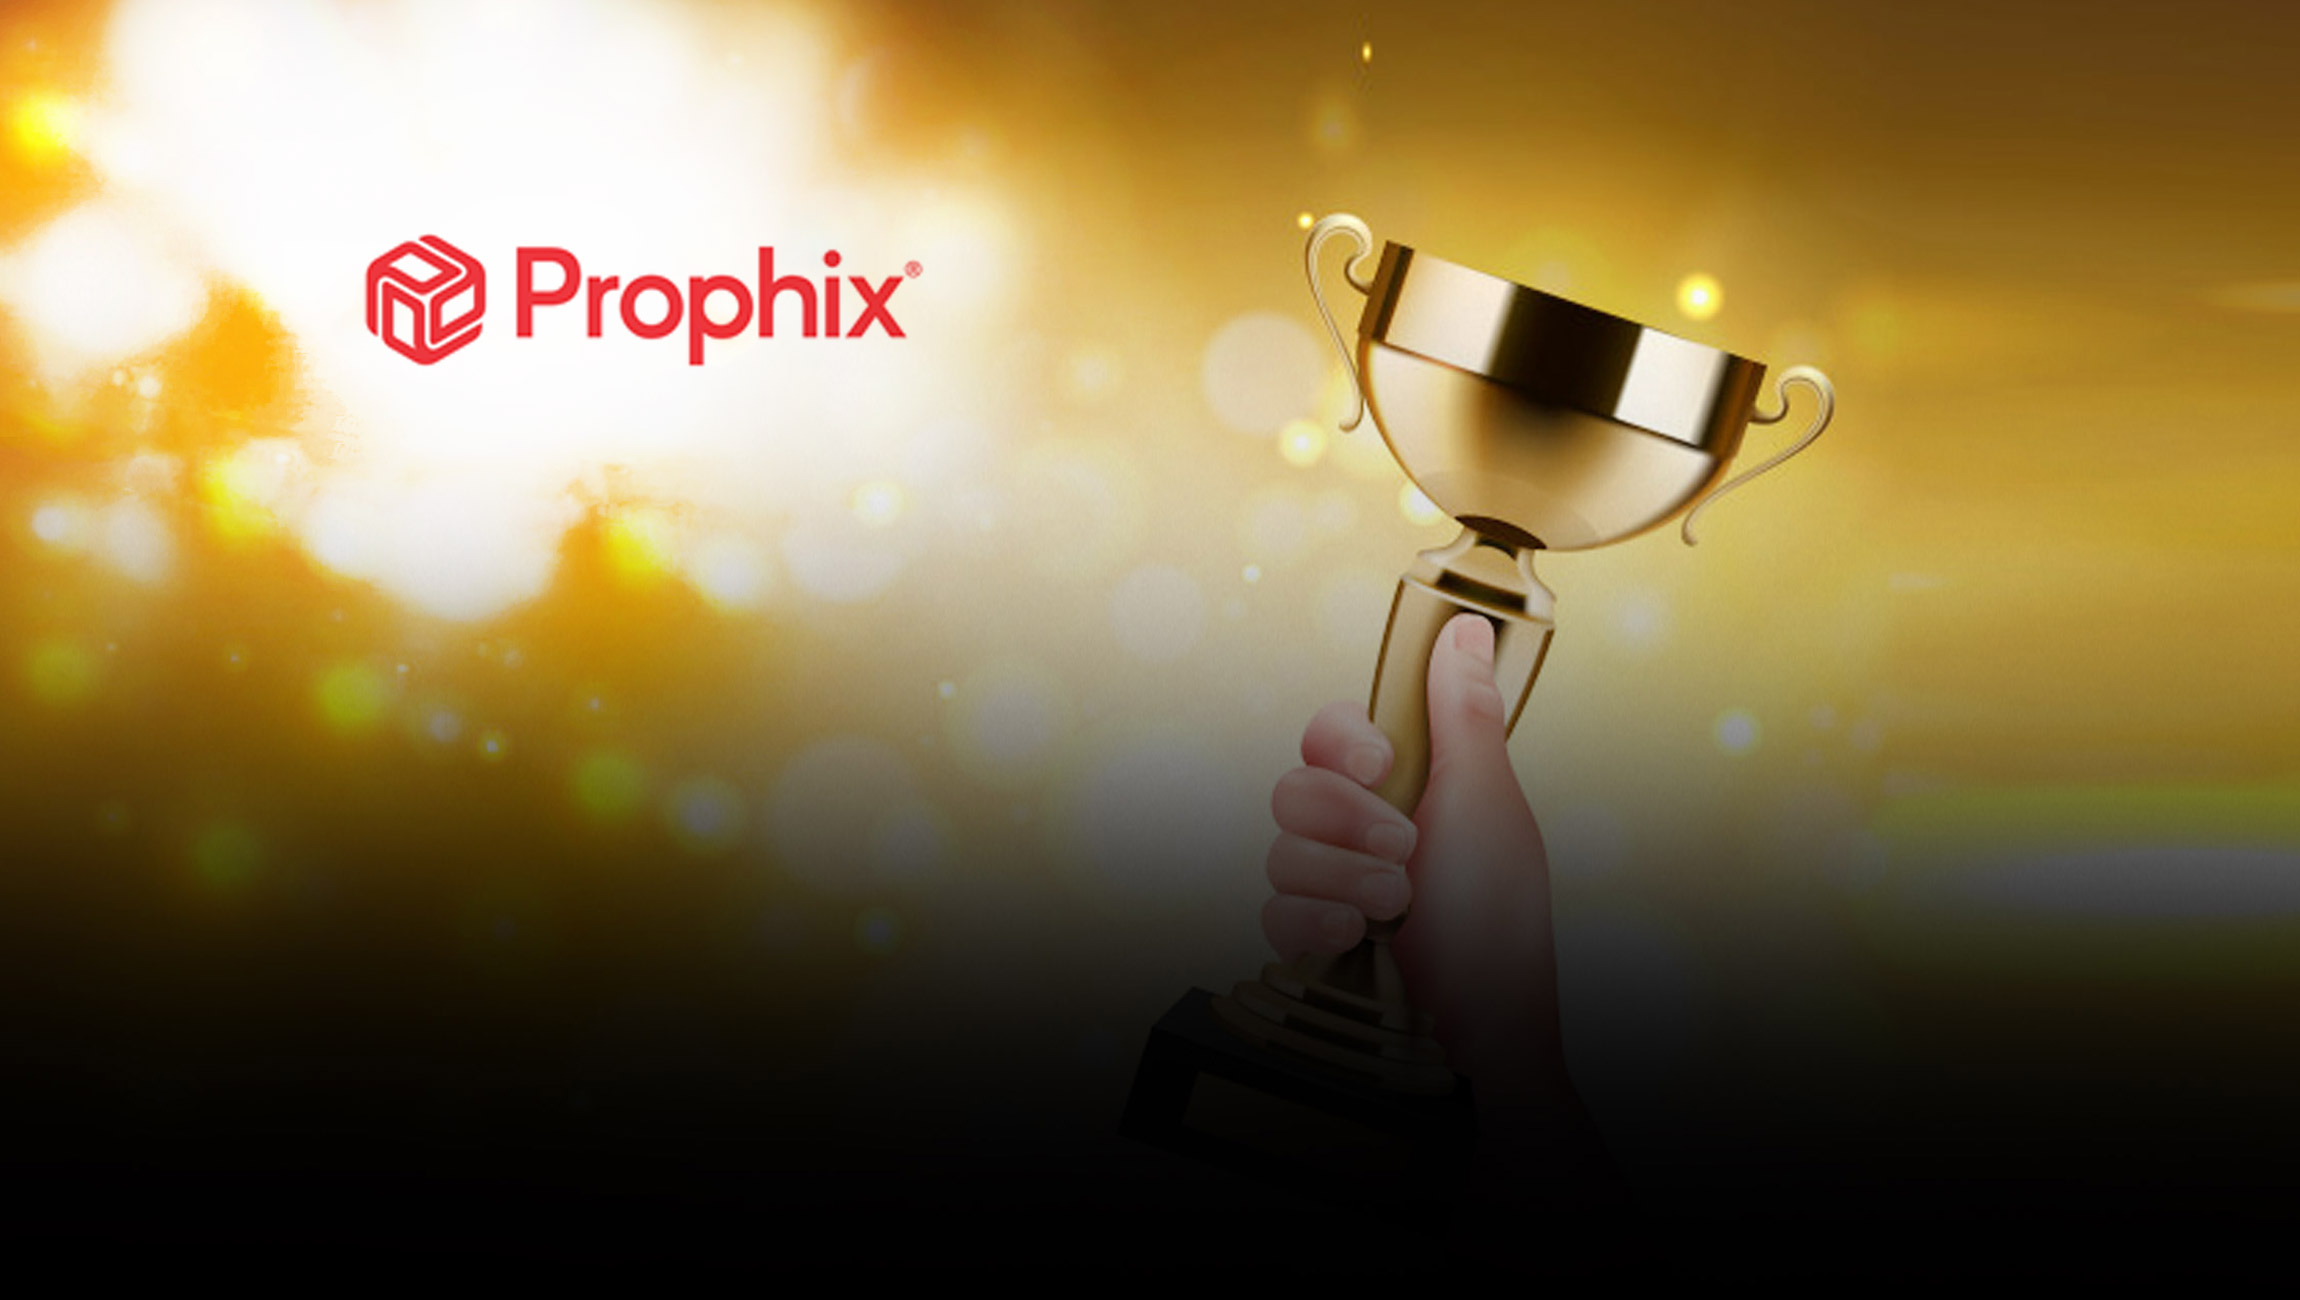 Prophix Earns Three TrustRadius "Top Rated" Awards